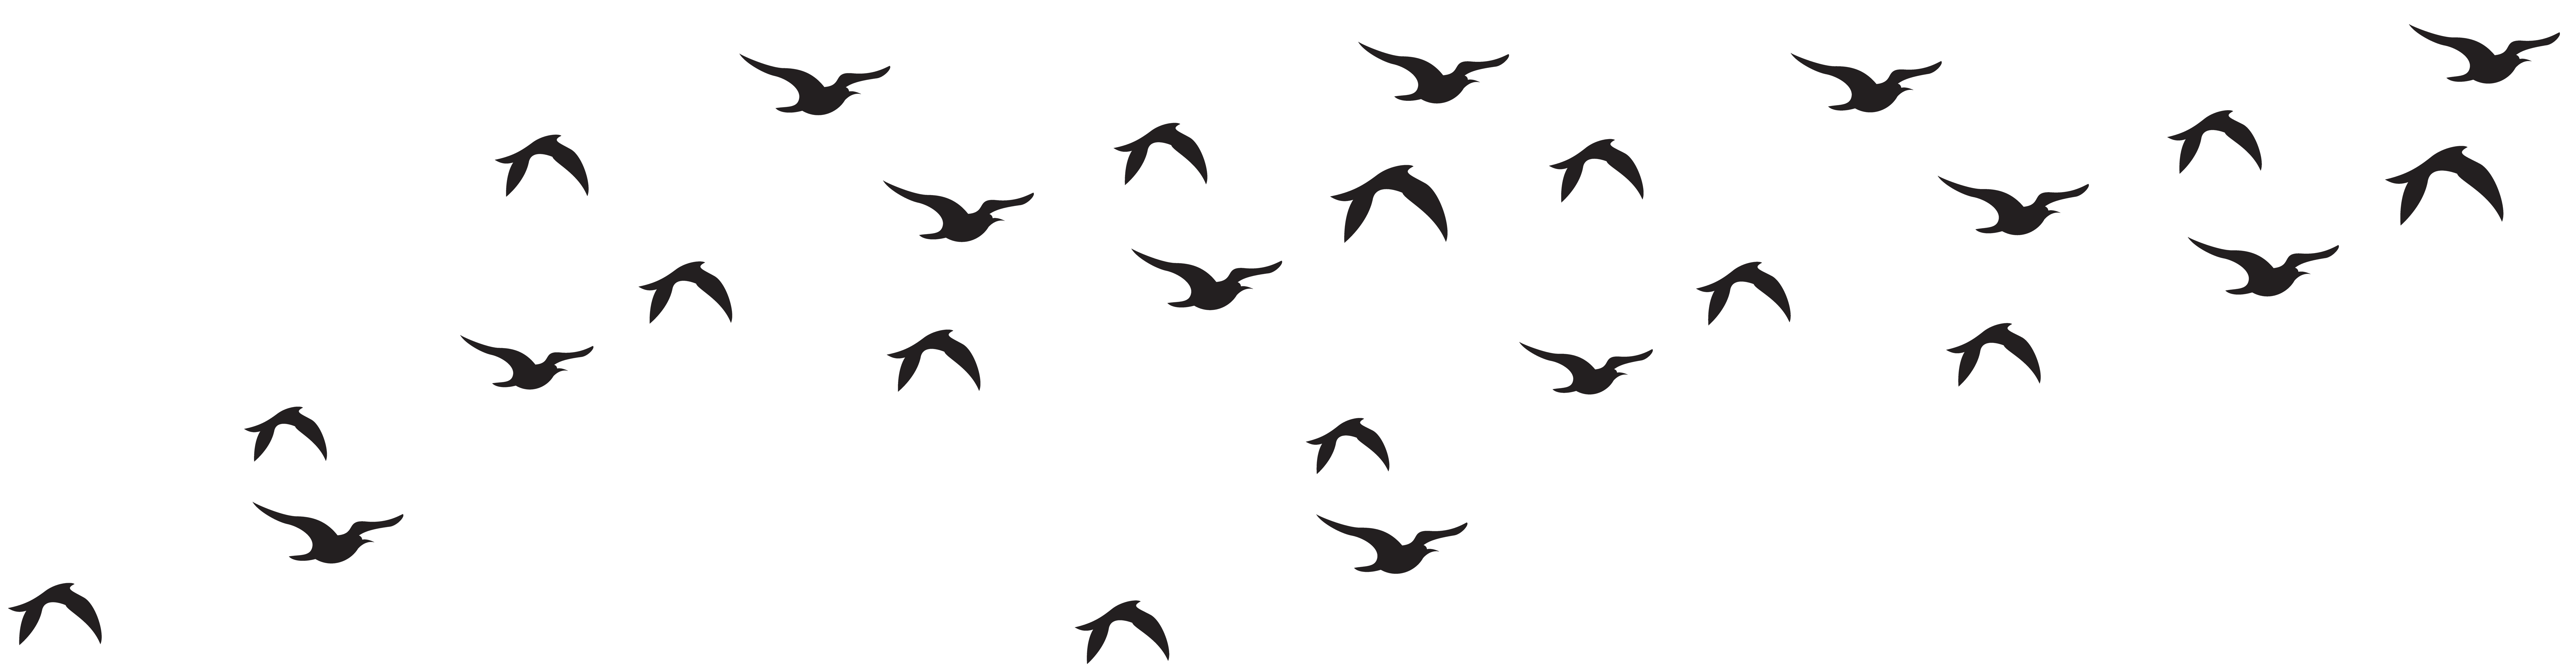 Bird Black and white Logo Birds Flock Silhouette Clip